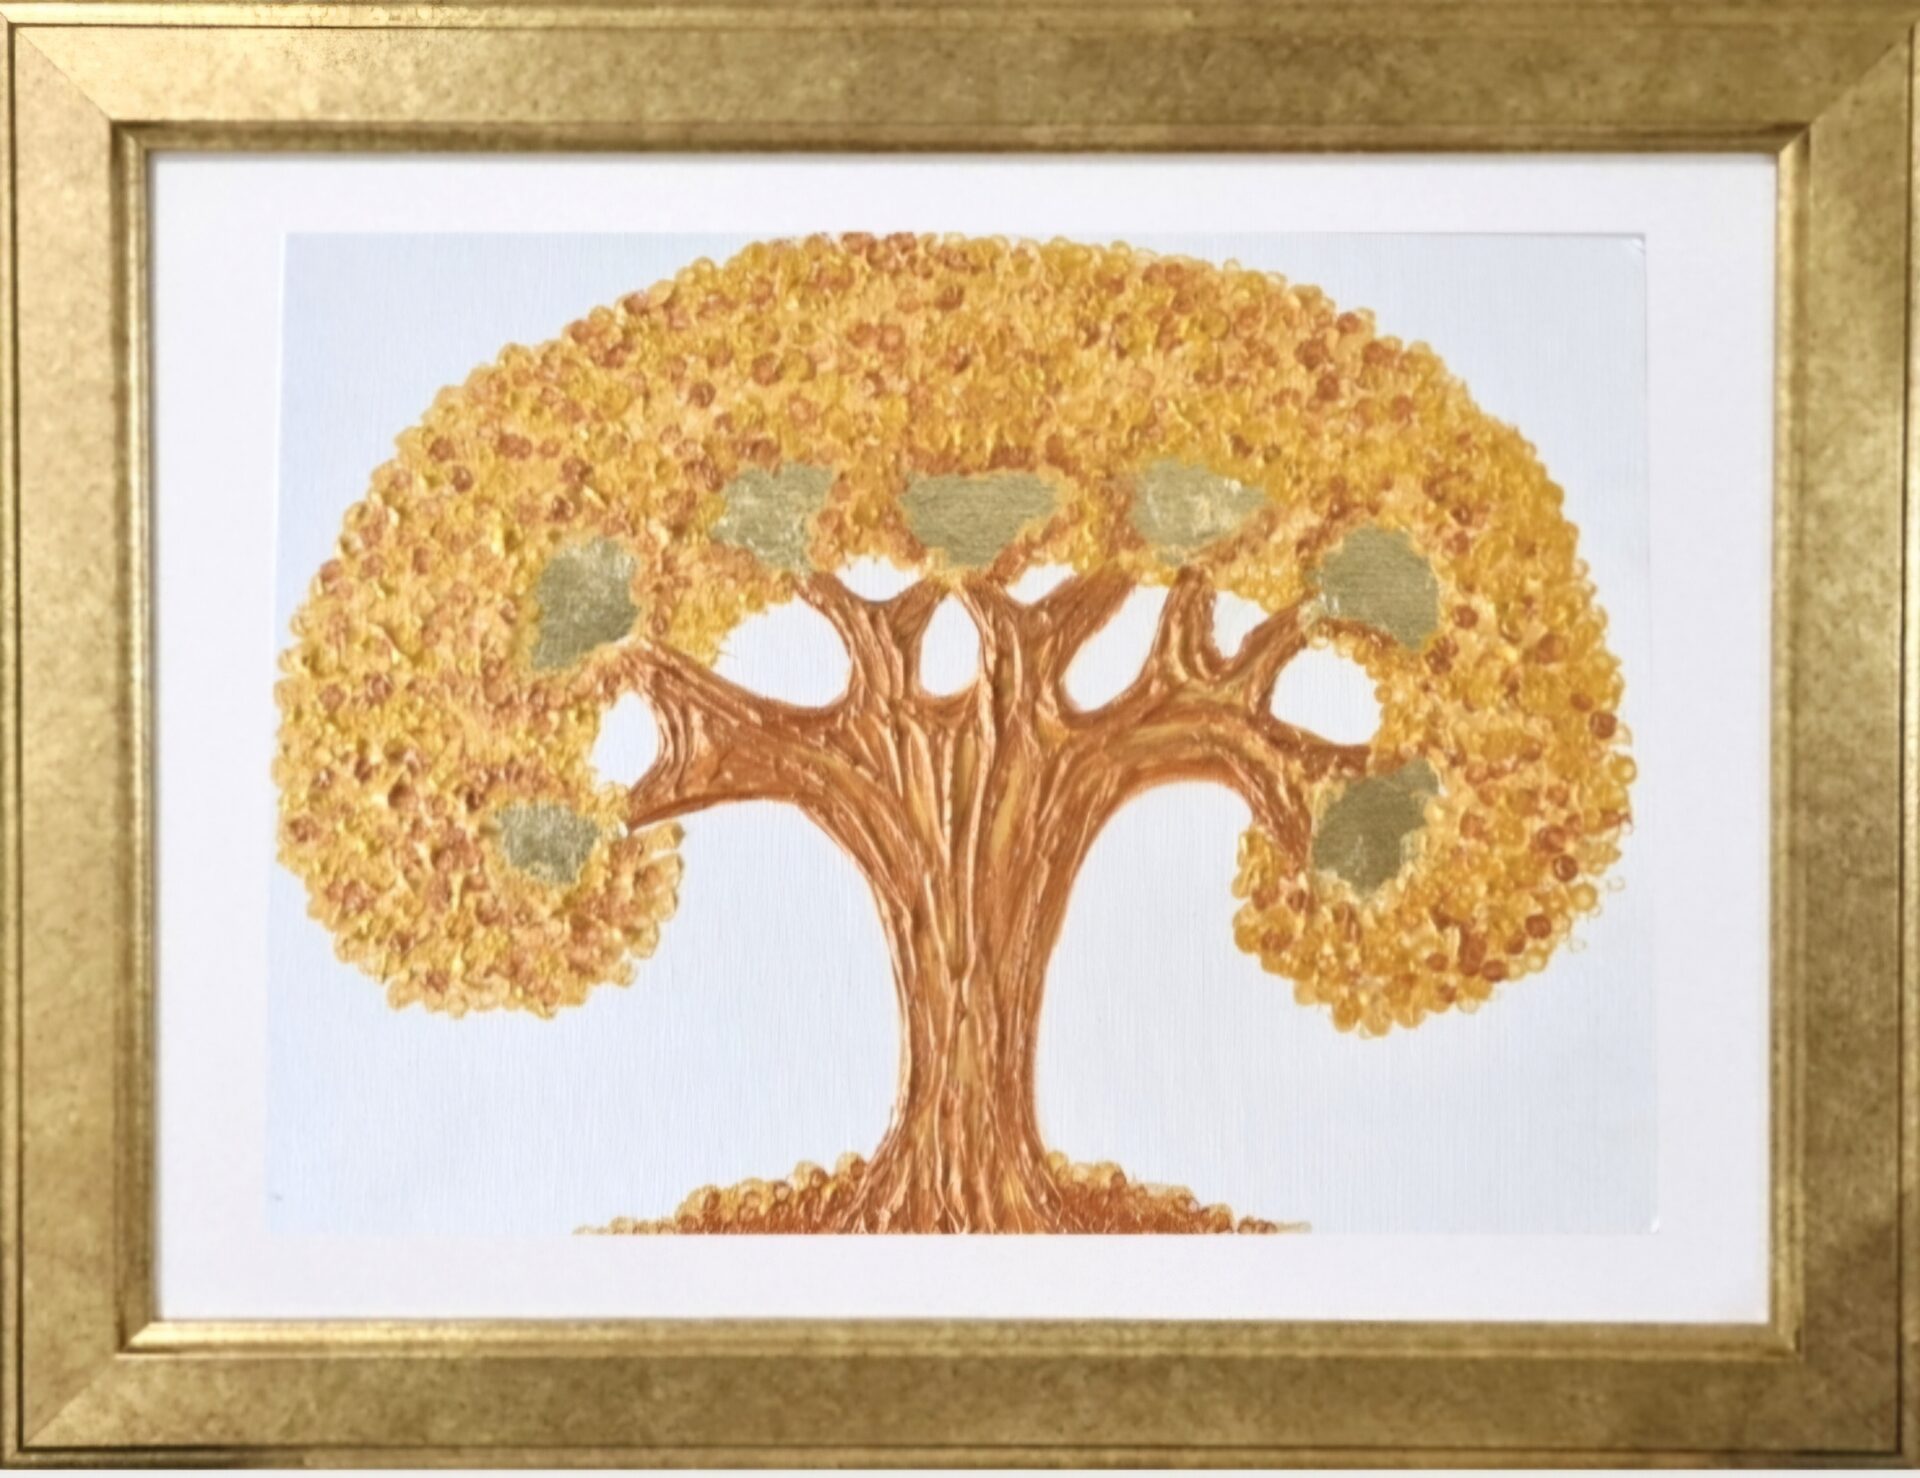 The Golden Kidney Tree